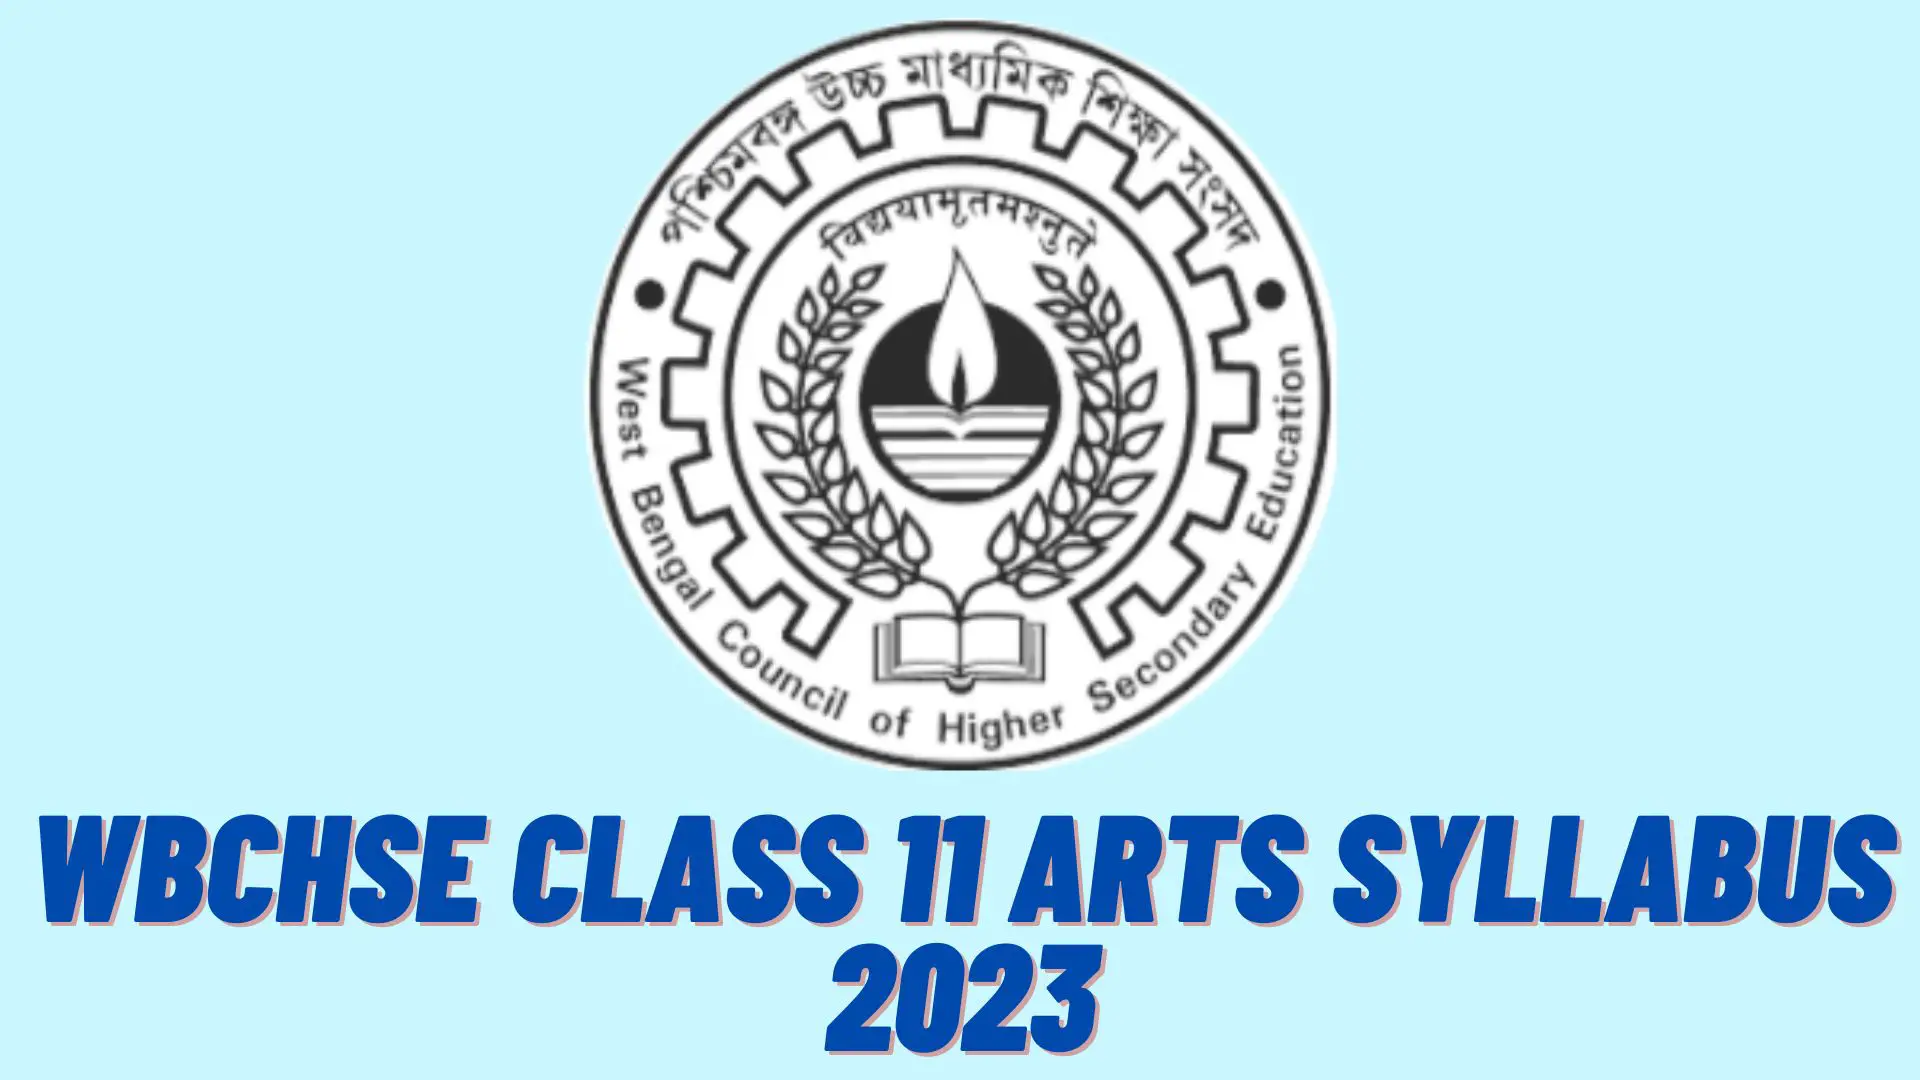 WBCHSE Class 11 Arts Syllabus 2023